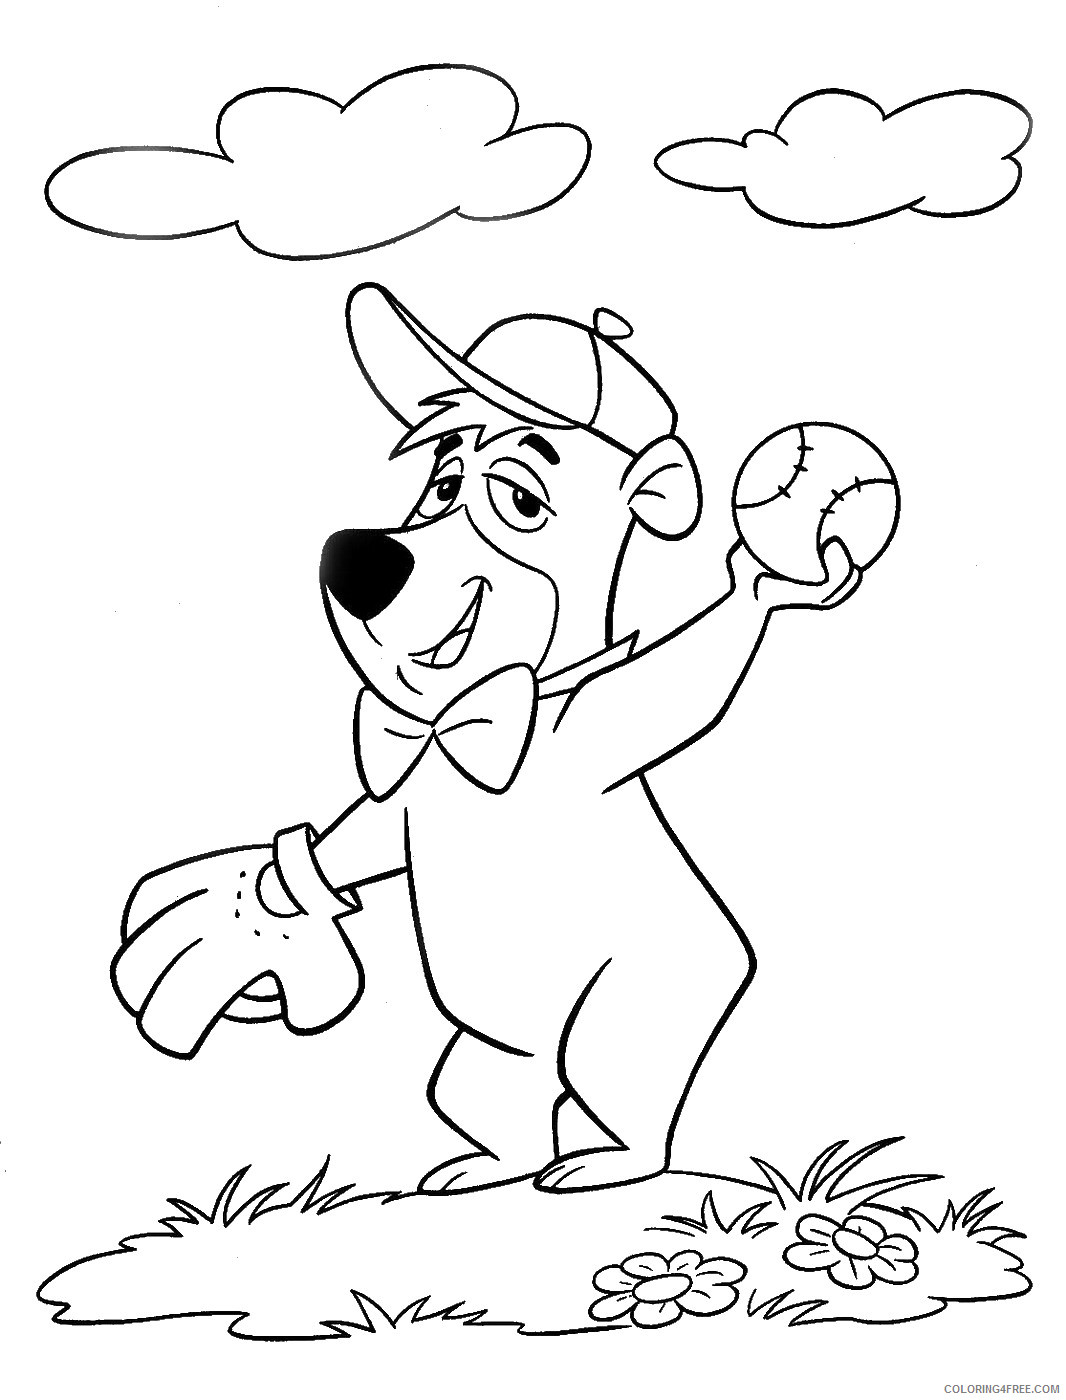 Yogi Bear Coloring Pages Cartoons yogi_bear_cl_02 Printable 2020 7252 Coloring4free